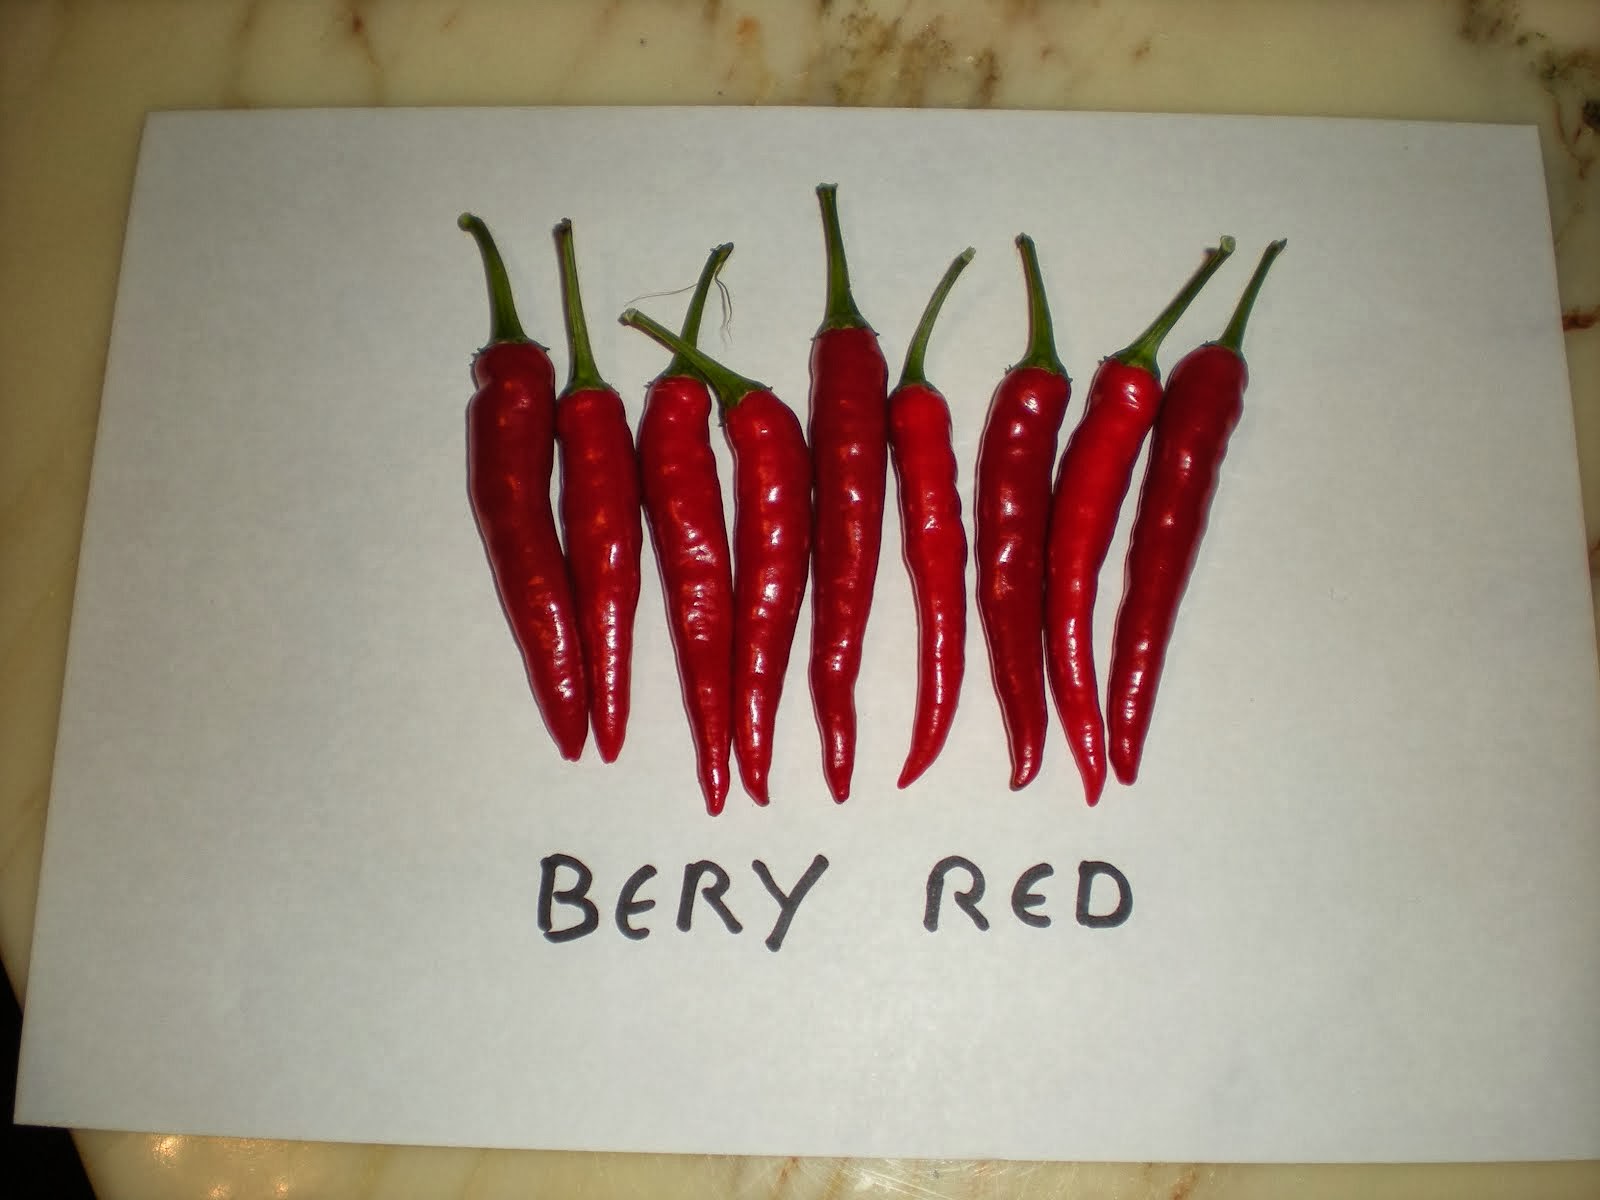 Bery red